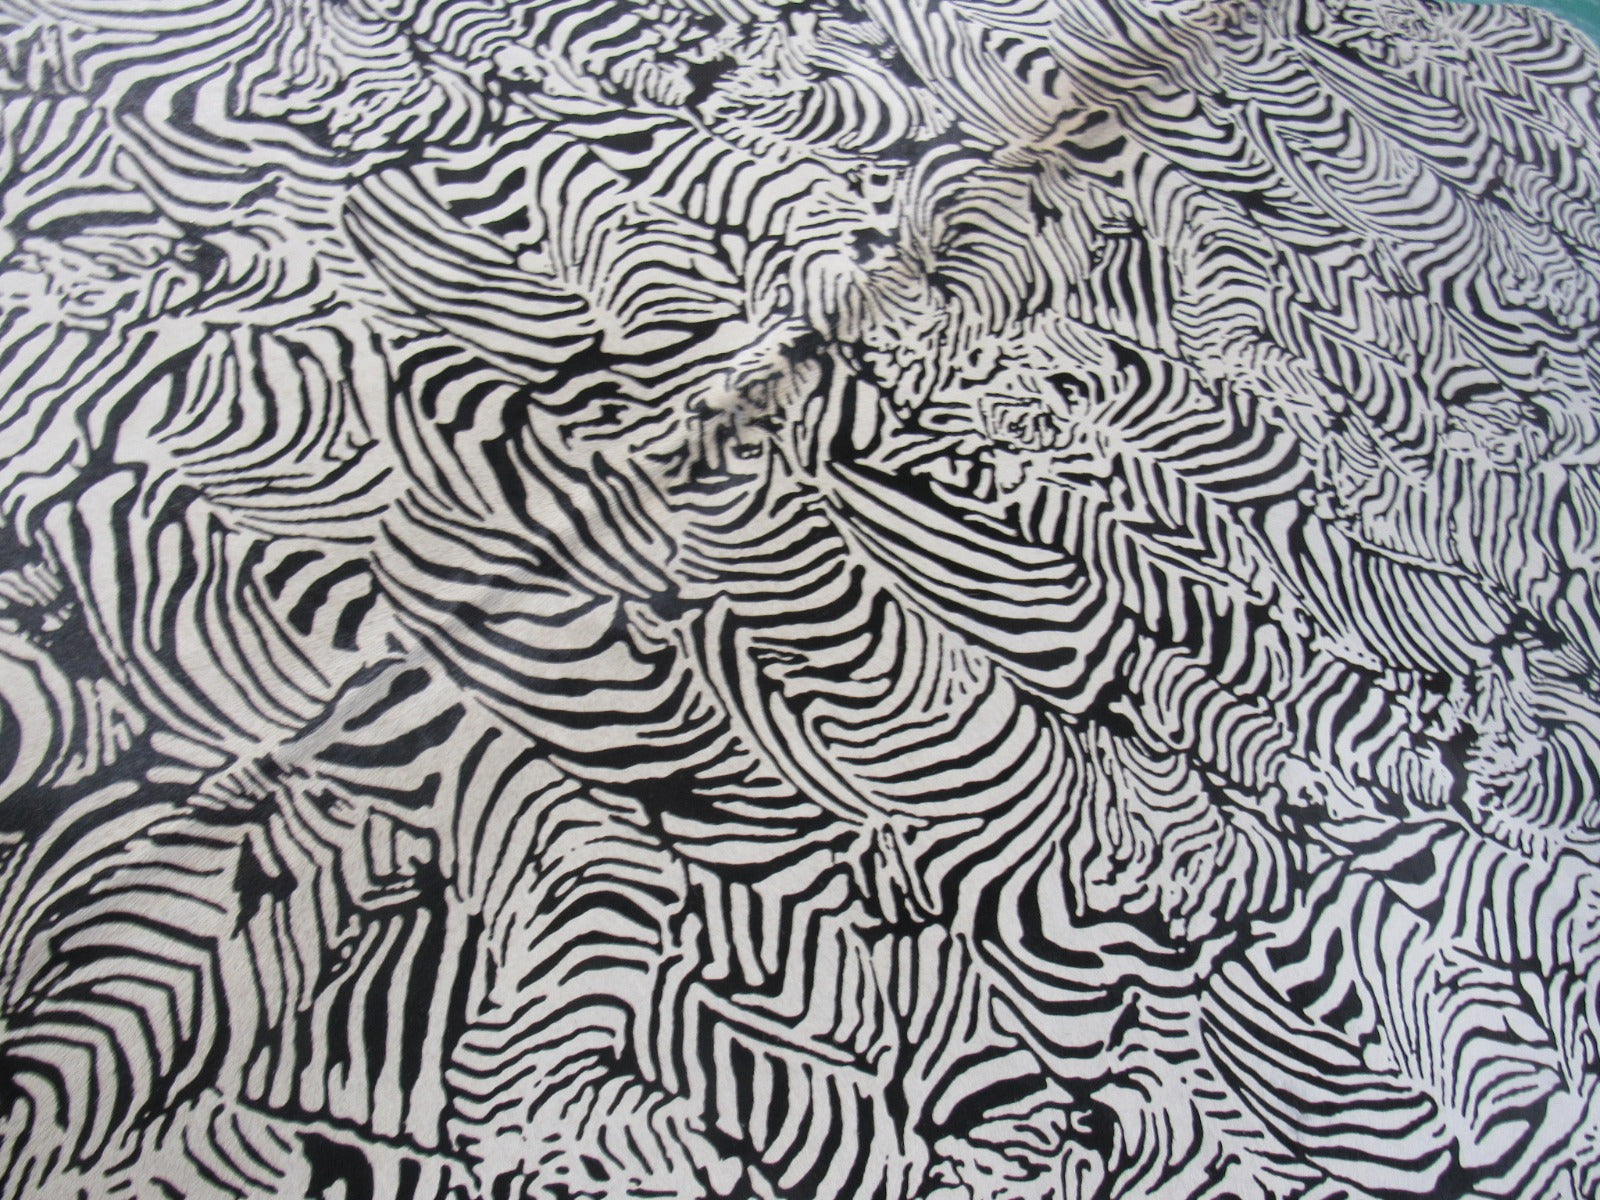 Zebra Pattern Printed Cowhide Rug Size: 7x5 1/4 feet M-1125